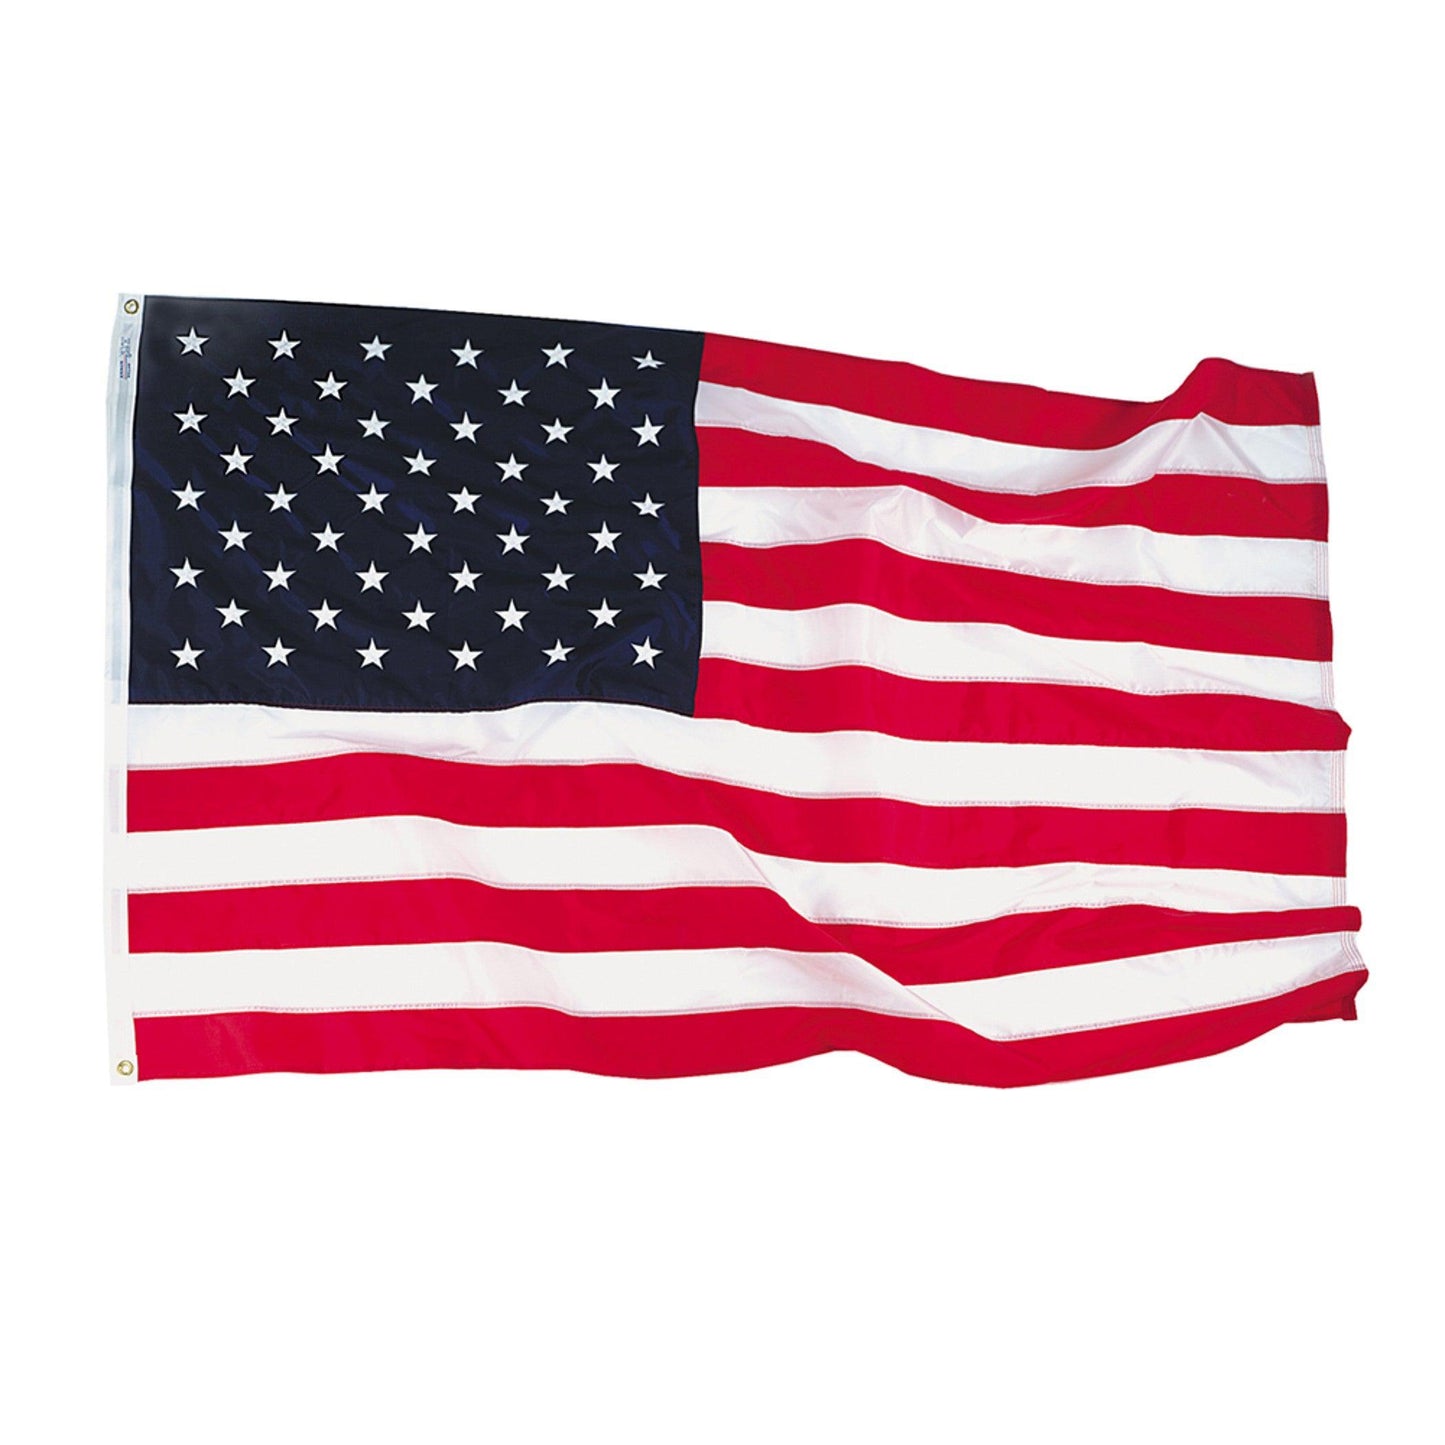 Nyl-Glo® Colorfast Outdoor U.S. Flags, 4' x 6' - Loomini